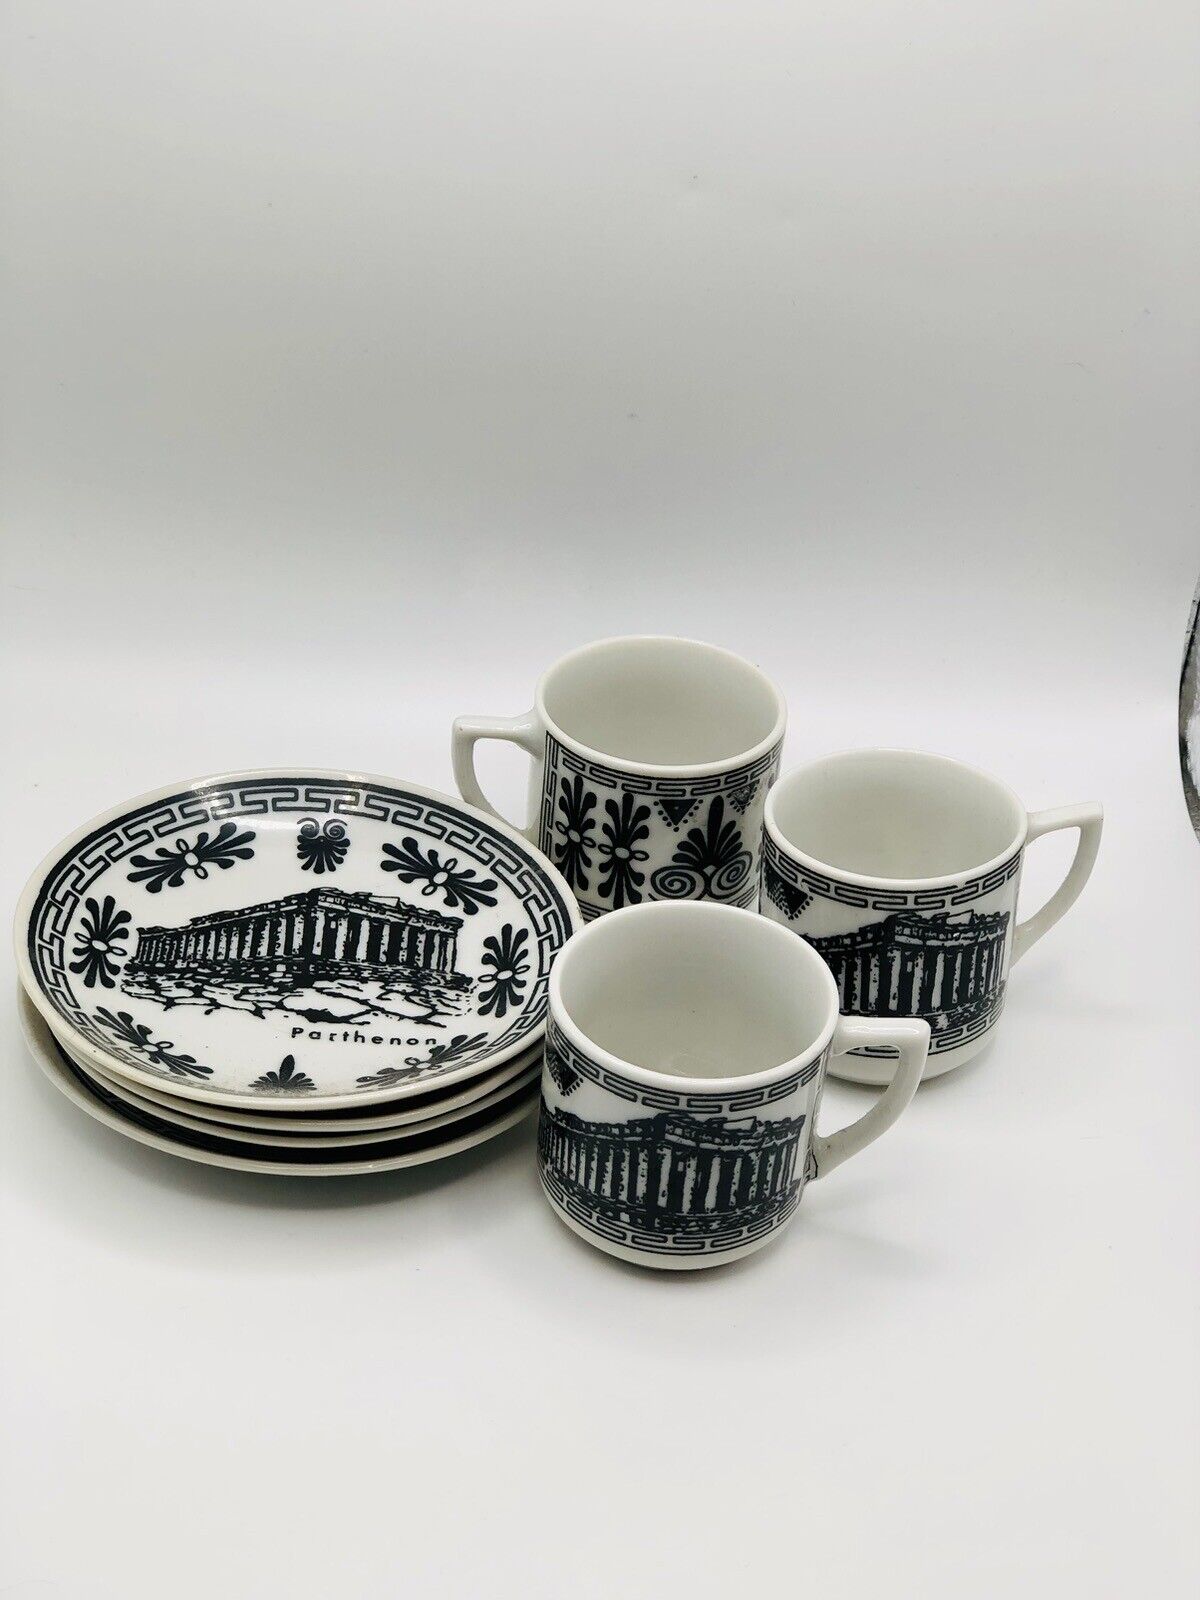 Greece Demitasse Handmade Cup & Saucer Black White Greek Set Of 3 Extra Plate